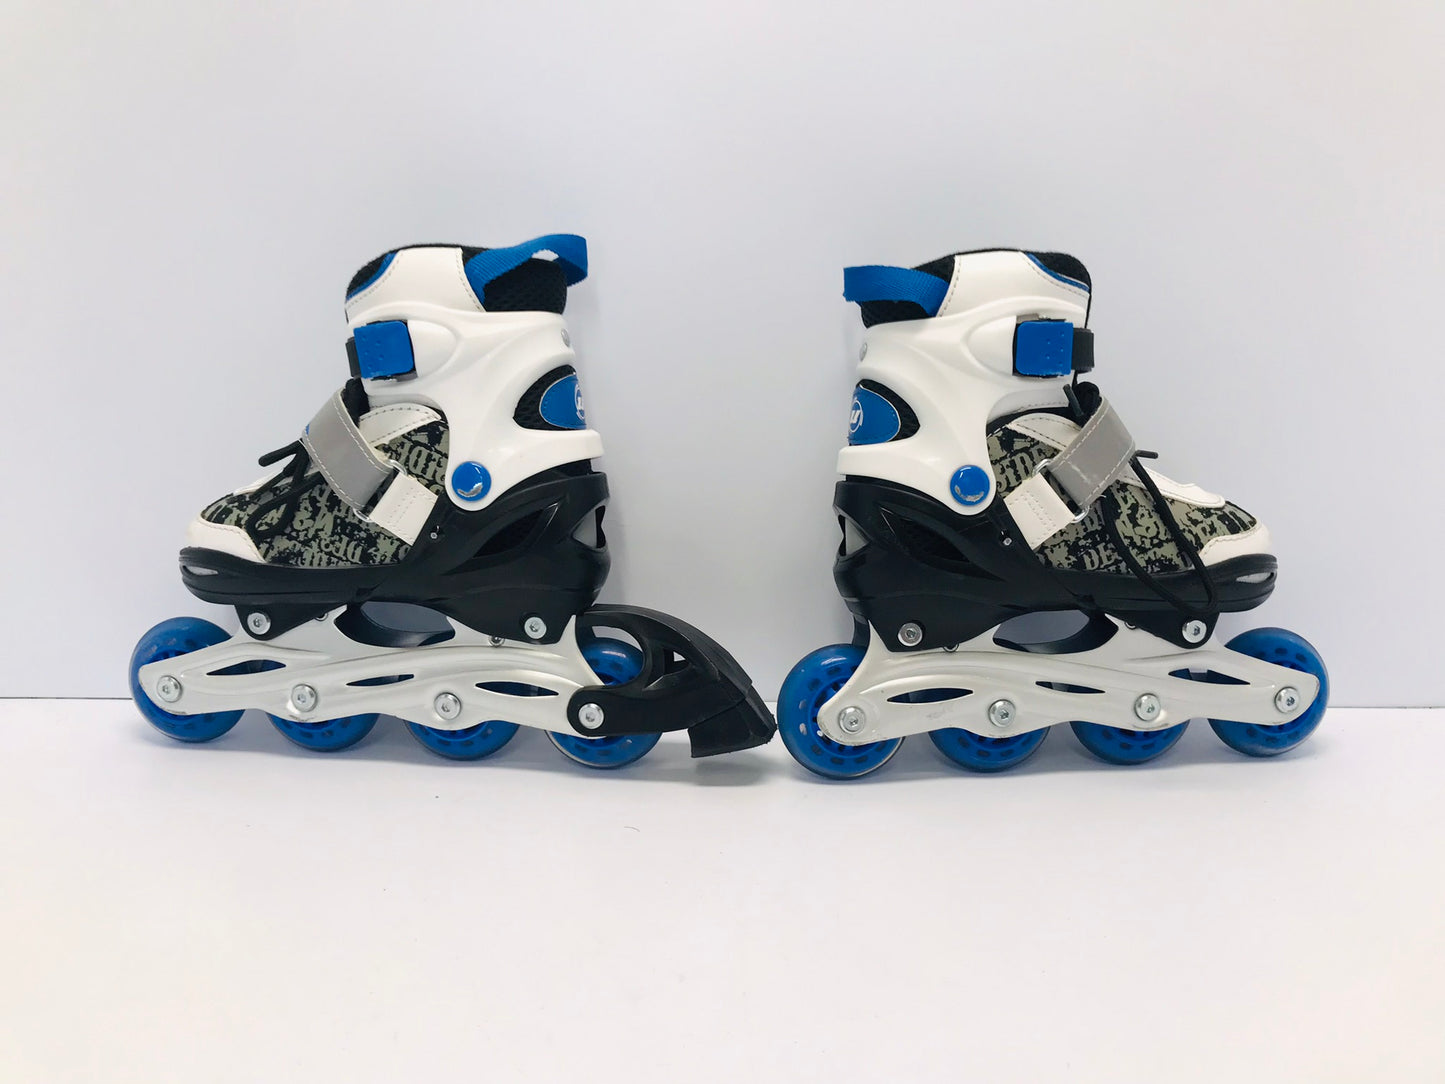 Inline Roller Skates Child Size 1-4 Shoe Size Adjustable Blue White Black Like New Worn Once